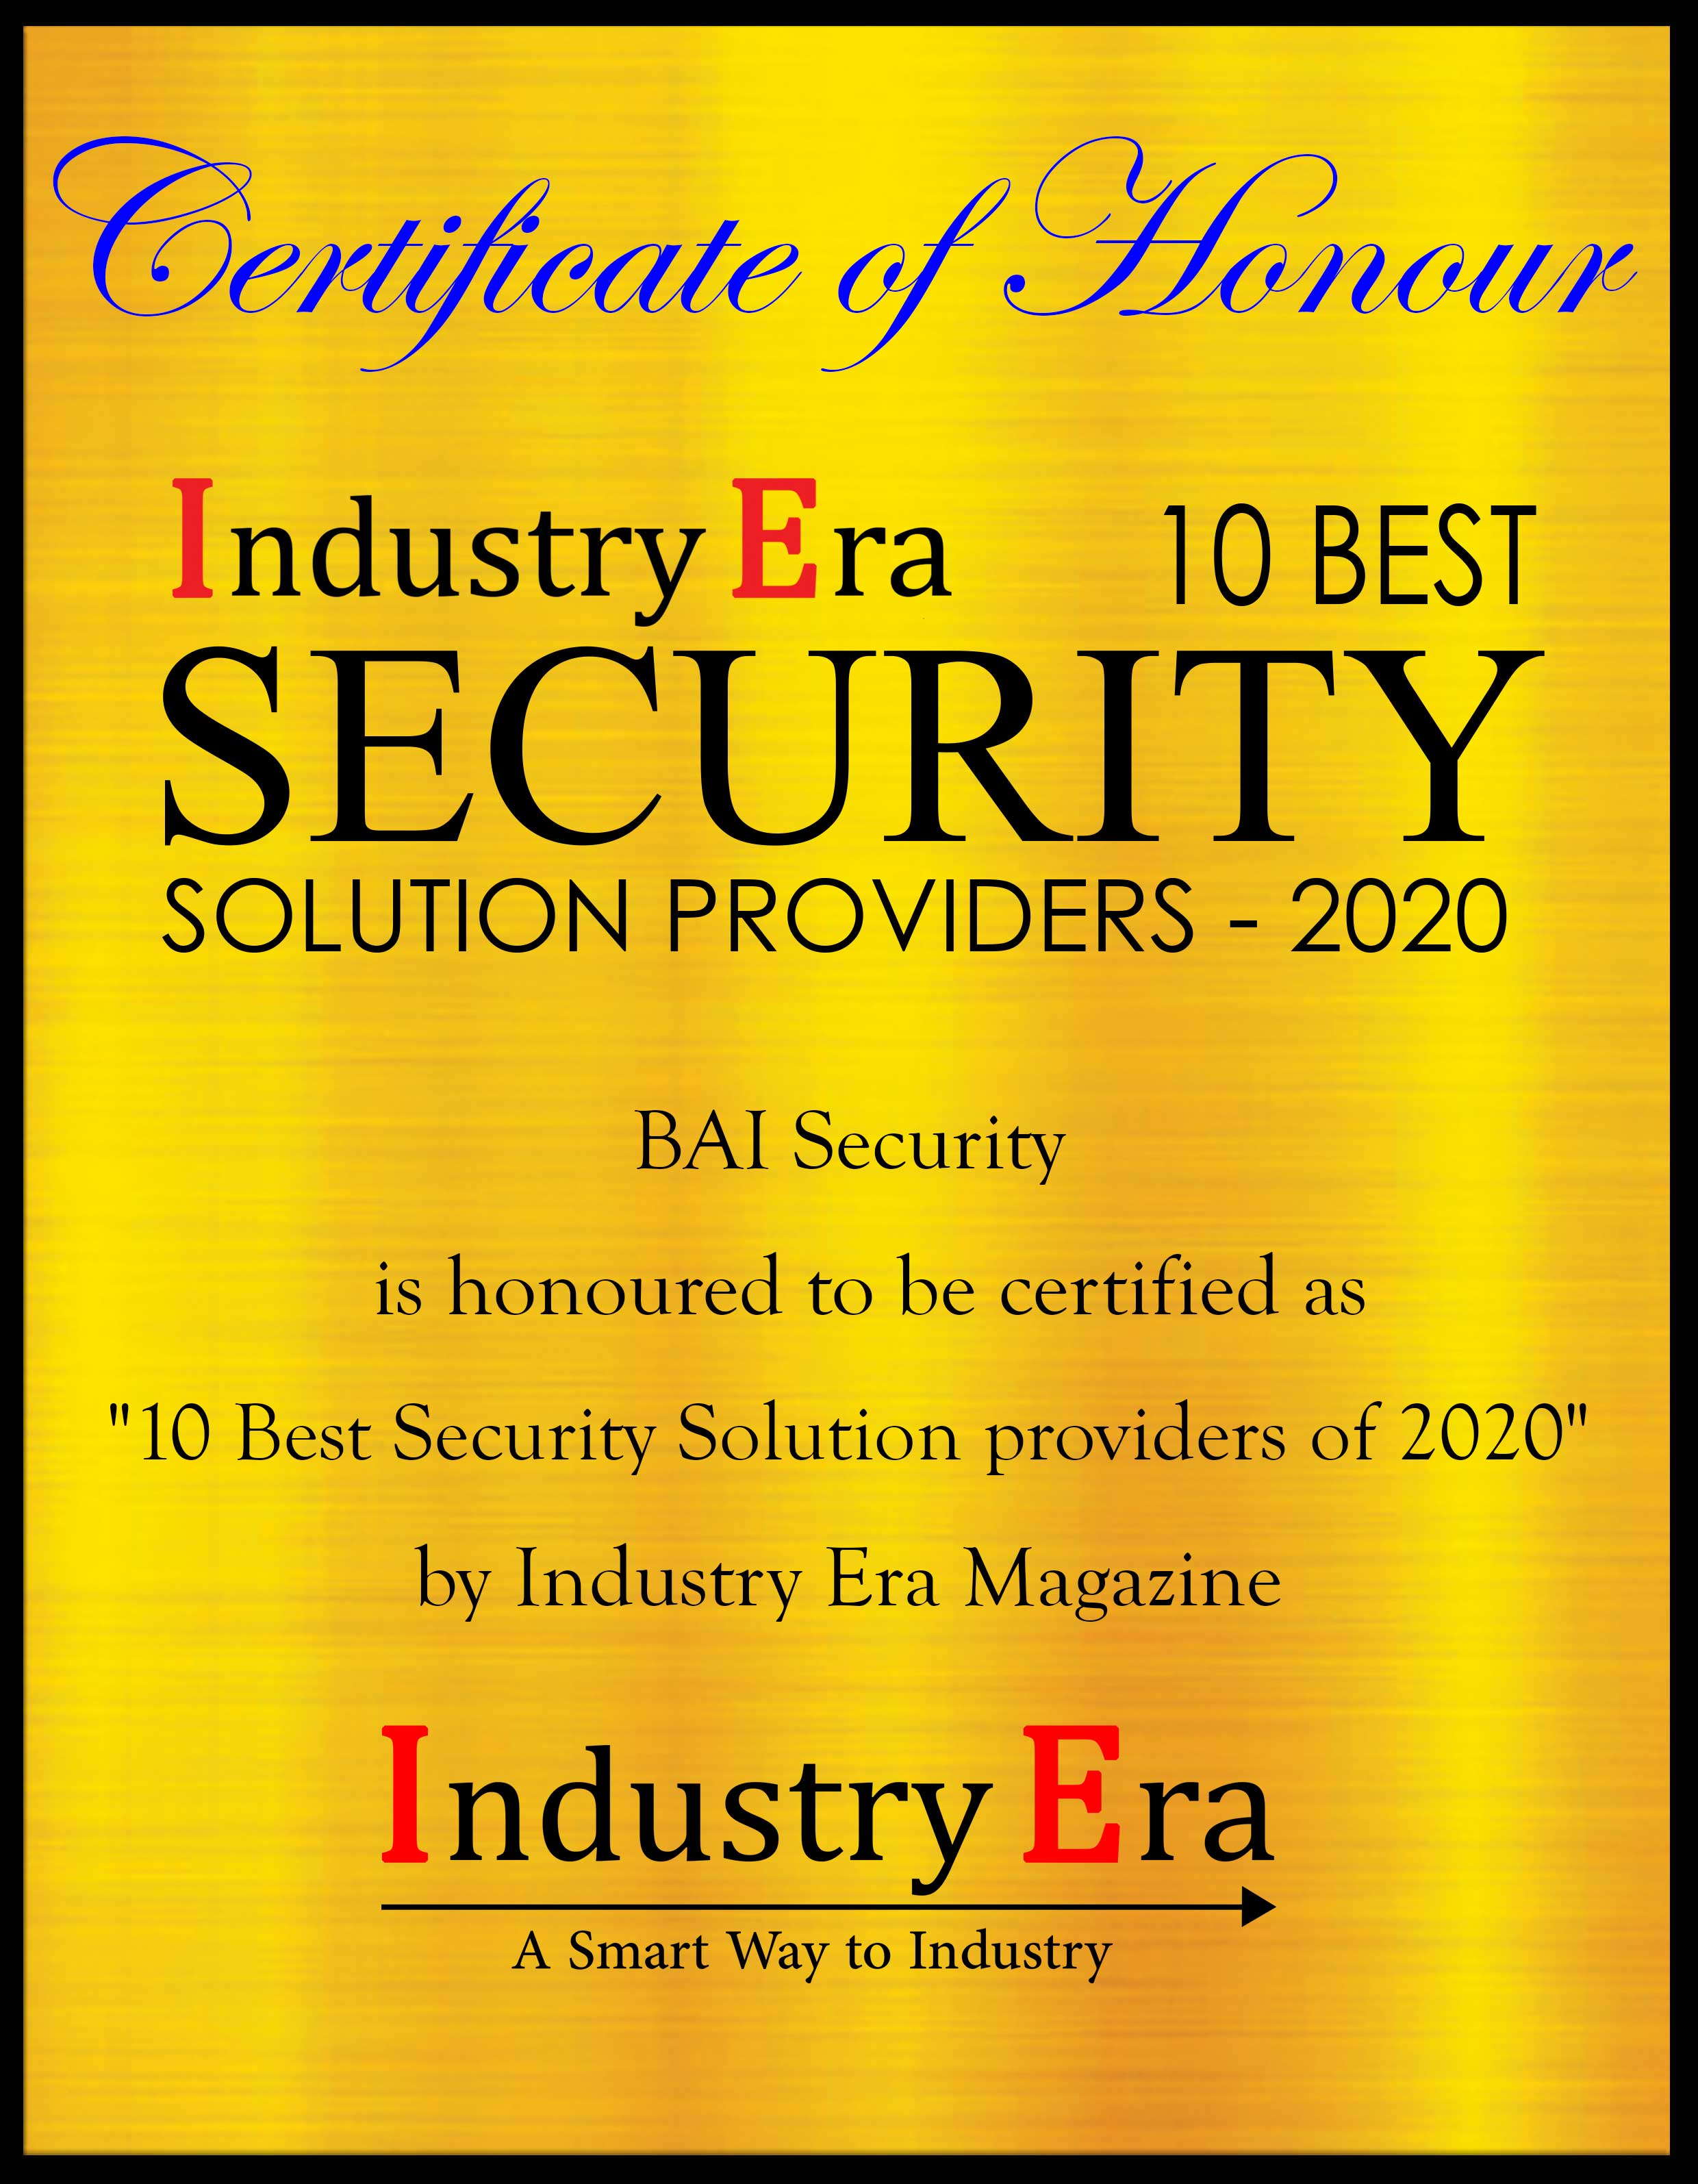 Michael Bruck CEO BAI Security